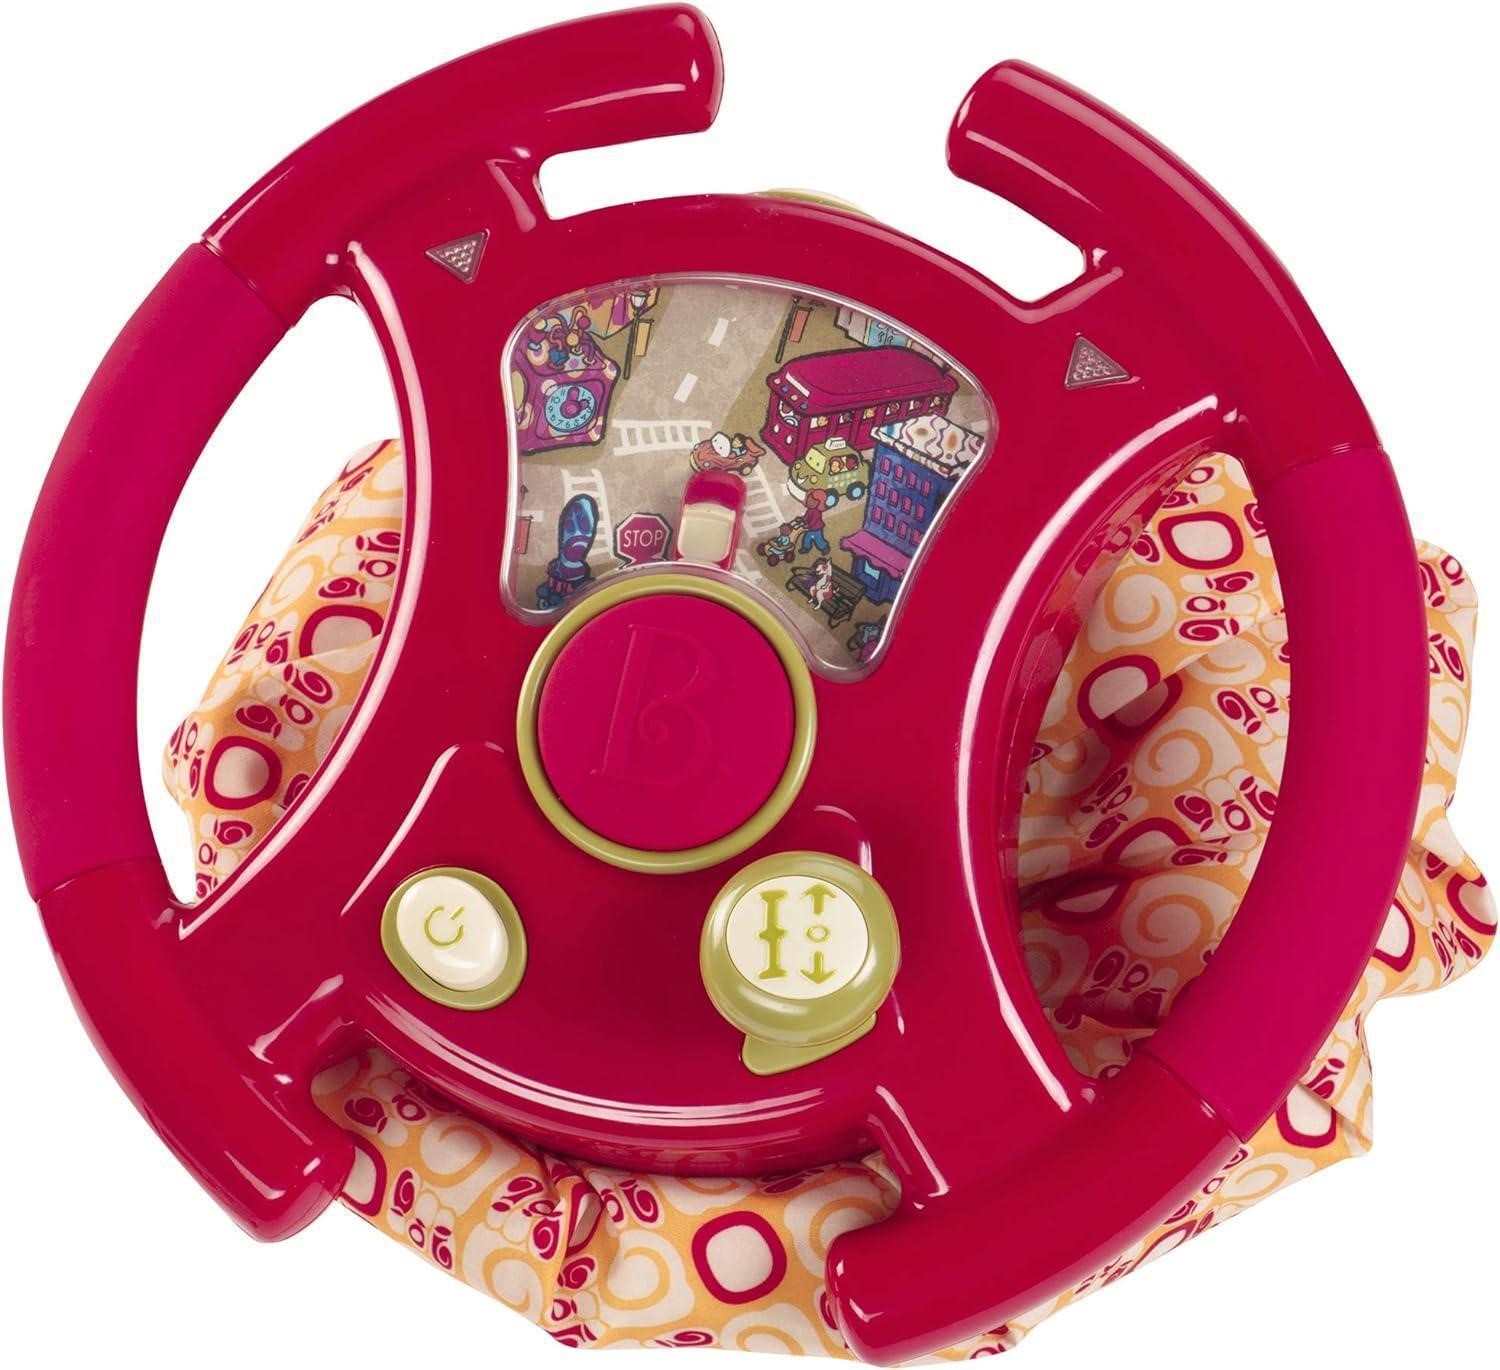 Battat Steering Wheel Toy